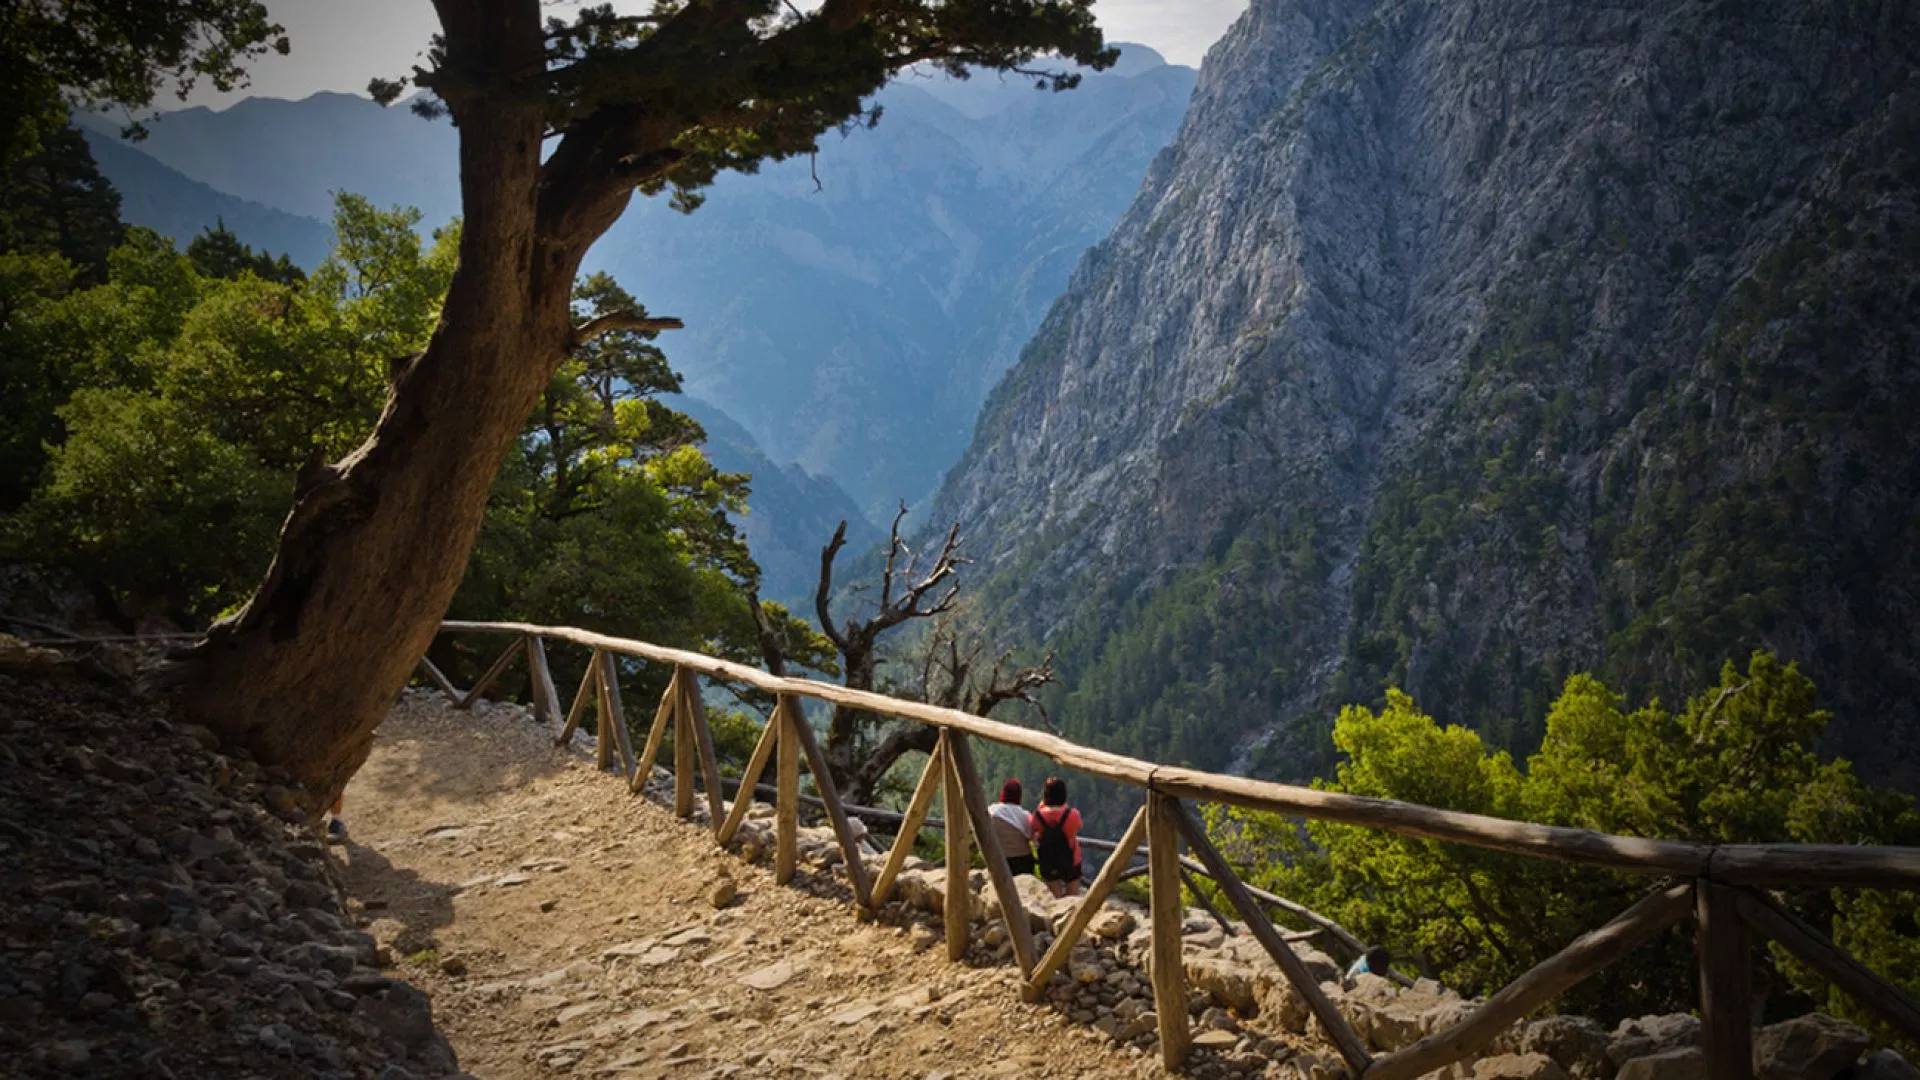 Samaria Gorge Trail in Greece, Europe | Trekking & Hiking - Rated 0.8